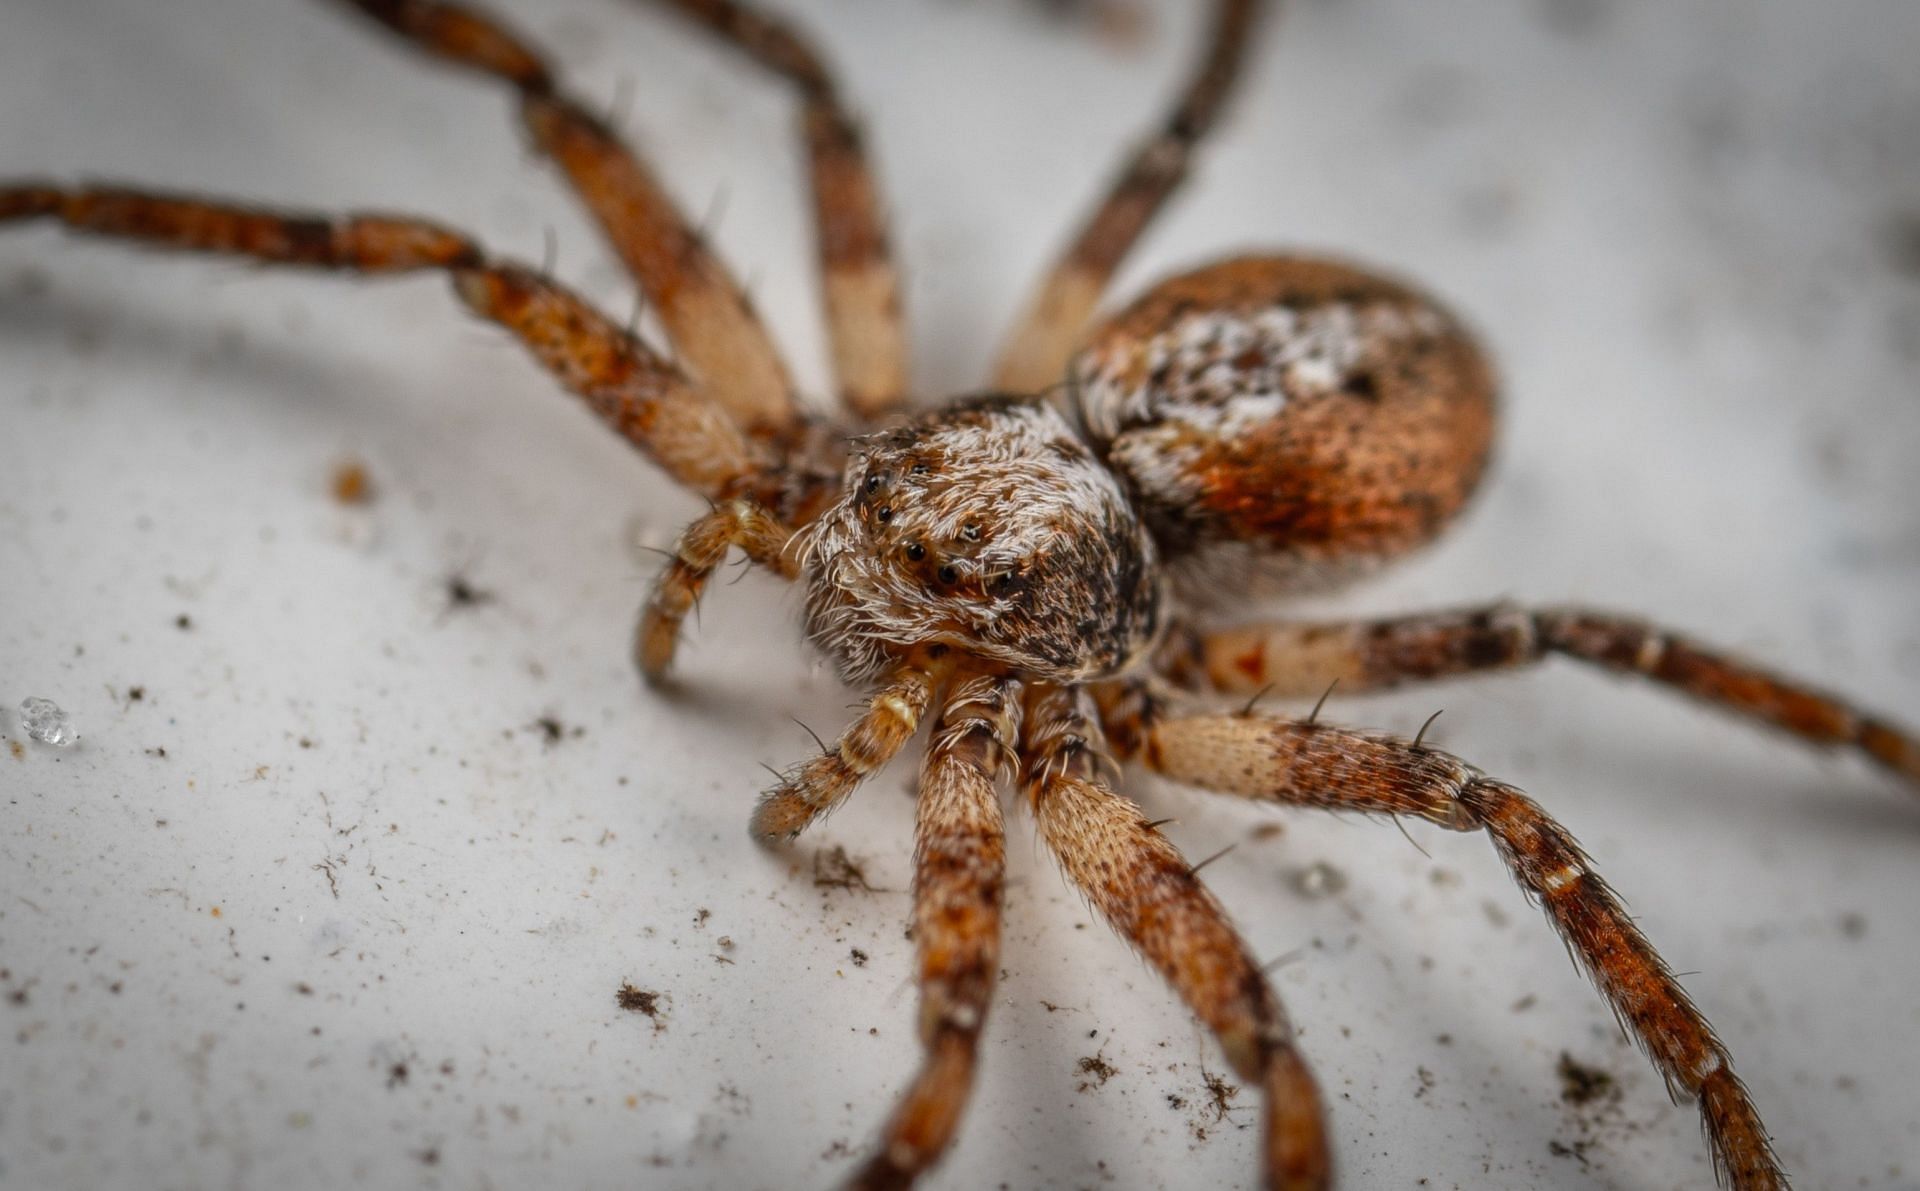 Brown recluse bite treatment should be sought immediately in case of a spider bite (Image via Pexels @Egor Kamelev)